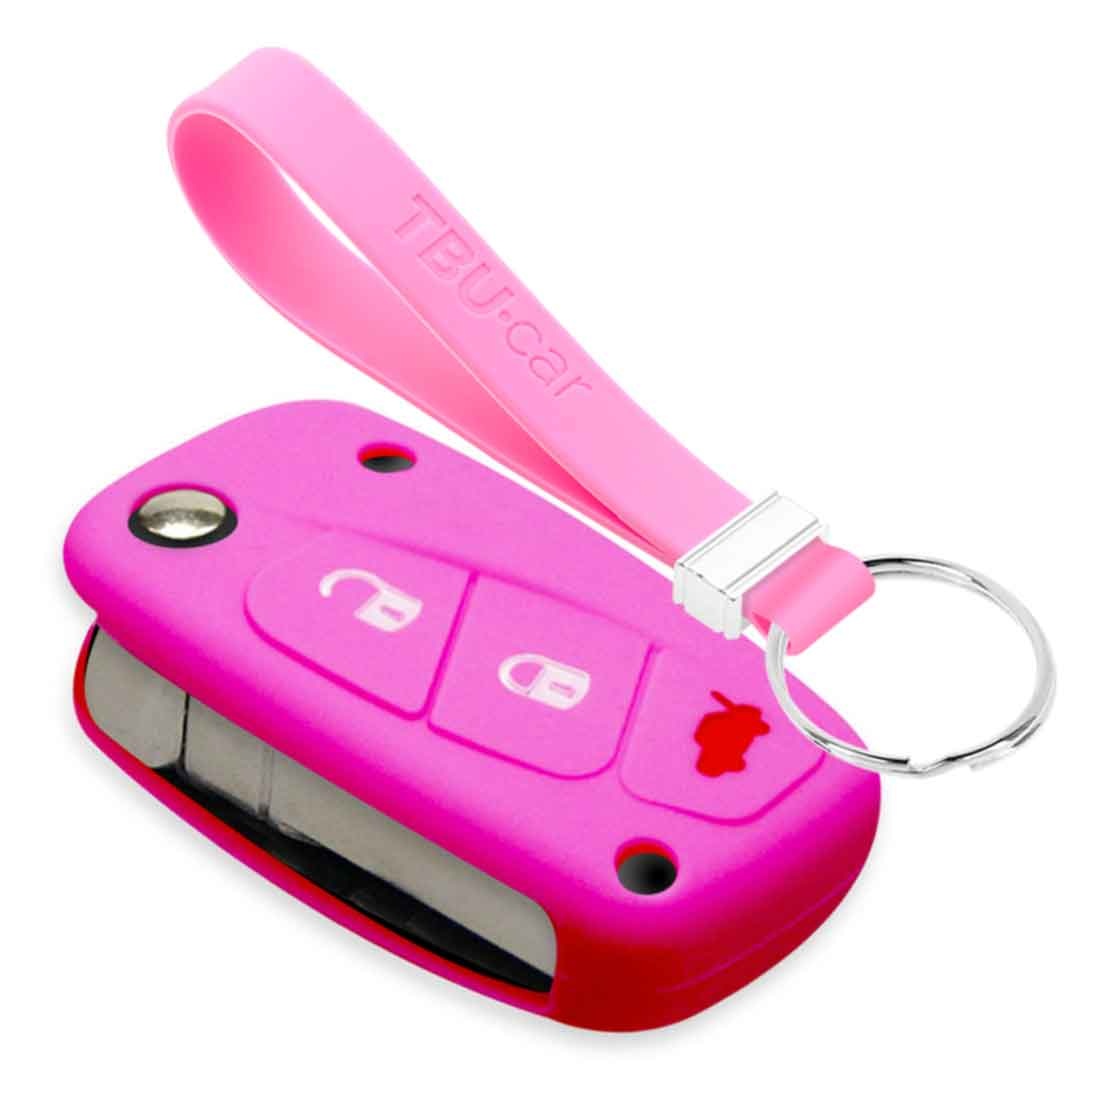 TBU car TBU car Autoschlüssel Hülle kompatibel mit Fiat 3 Tasten - Schutzhülle aus Silikon - Auto Schlüsselhülle Cover in Rosa